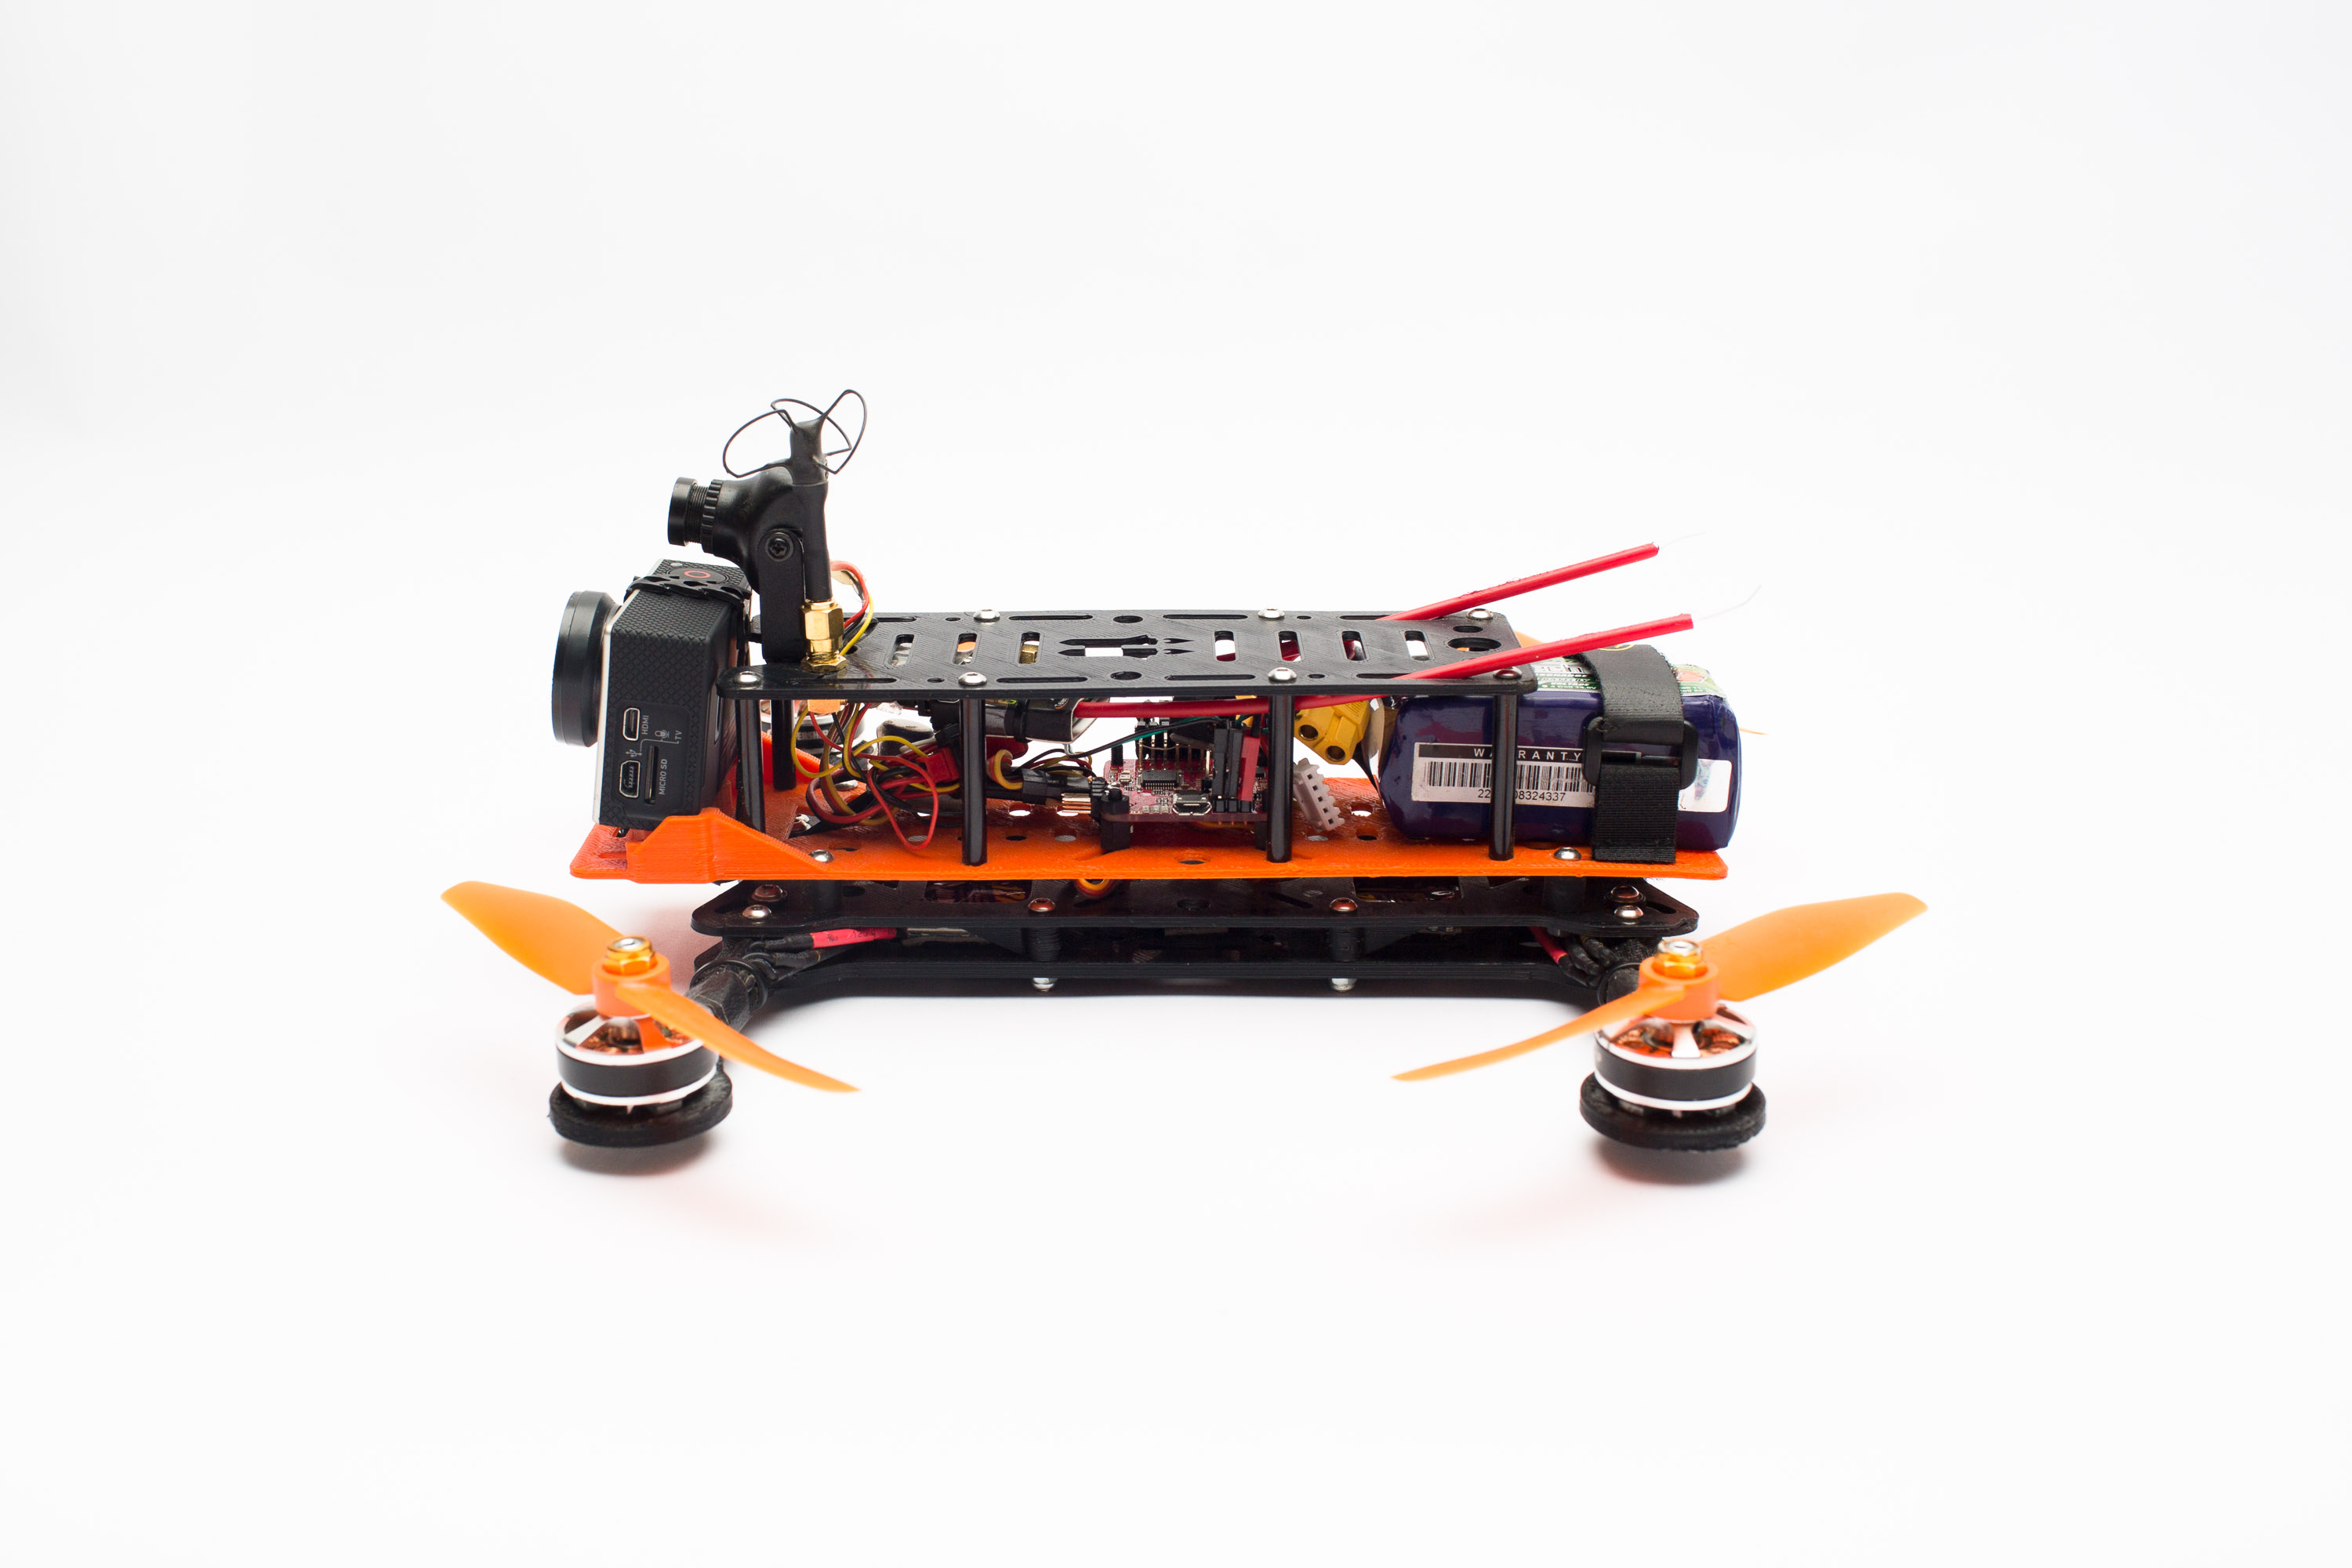 Hovership - FPV Racing Drones